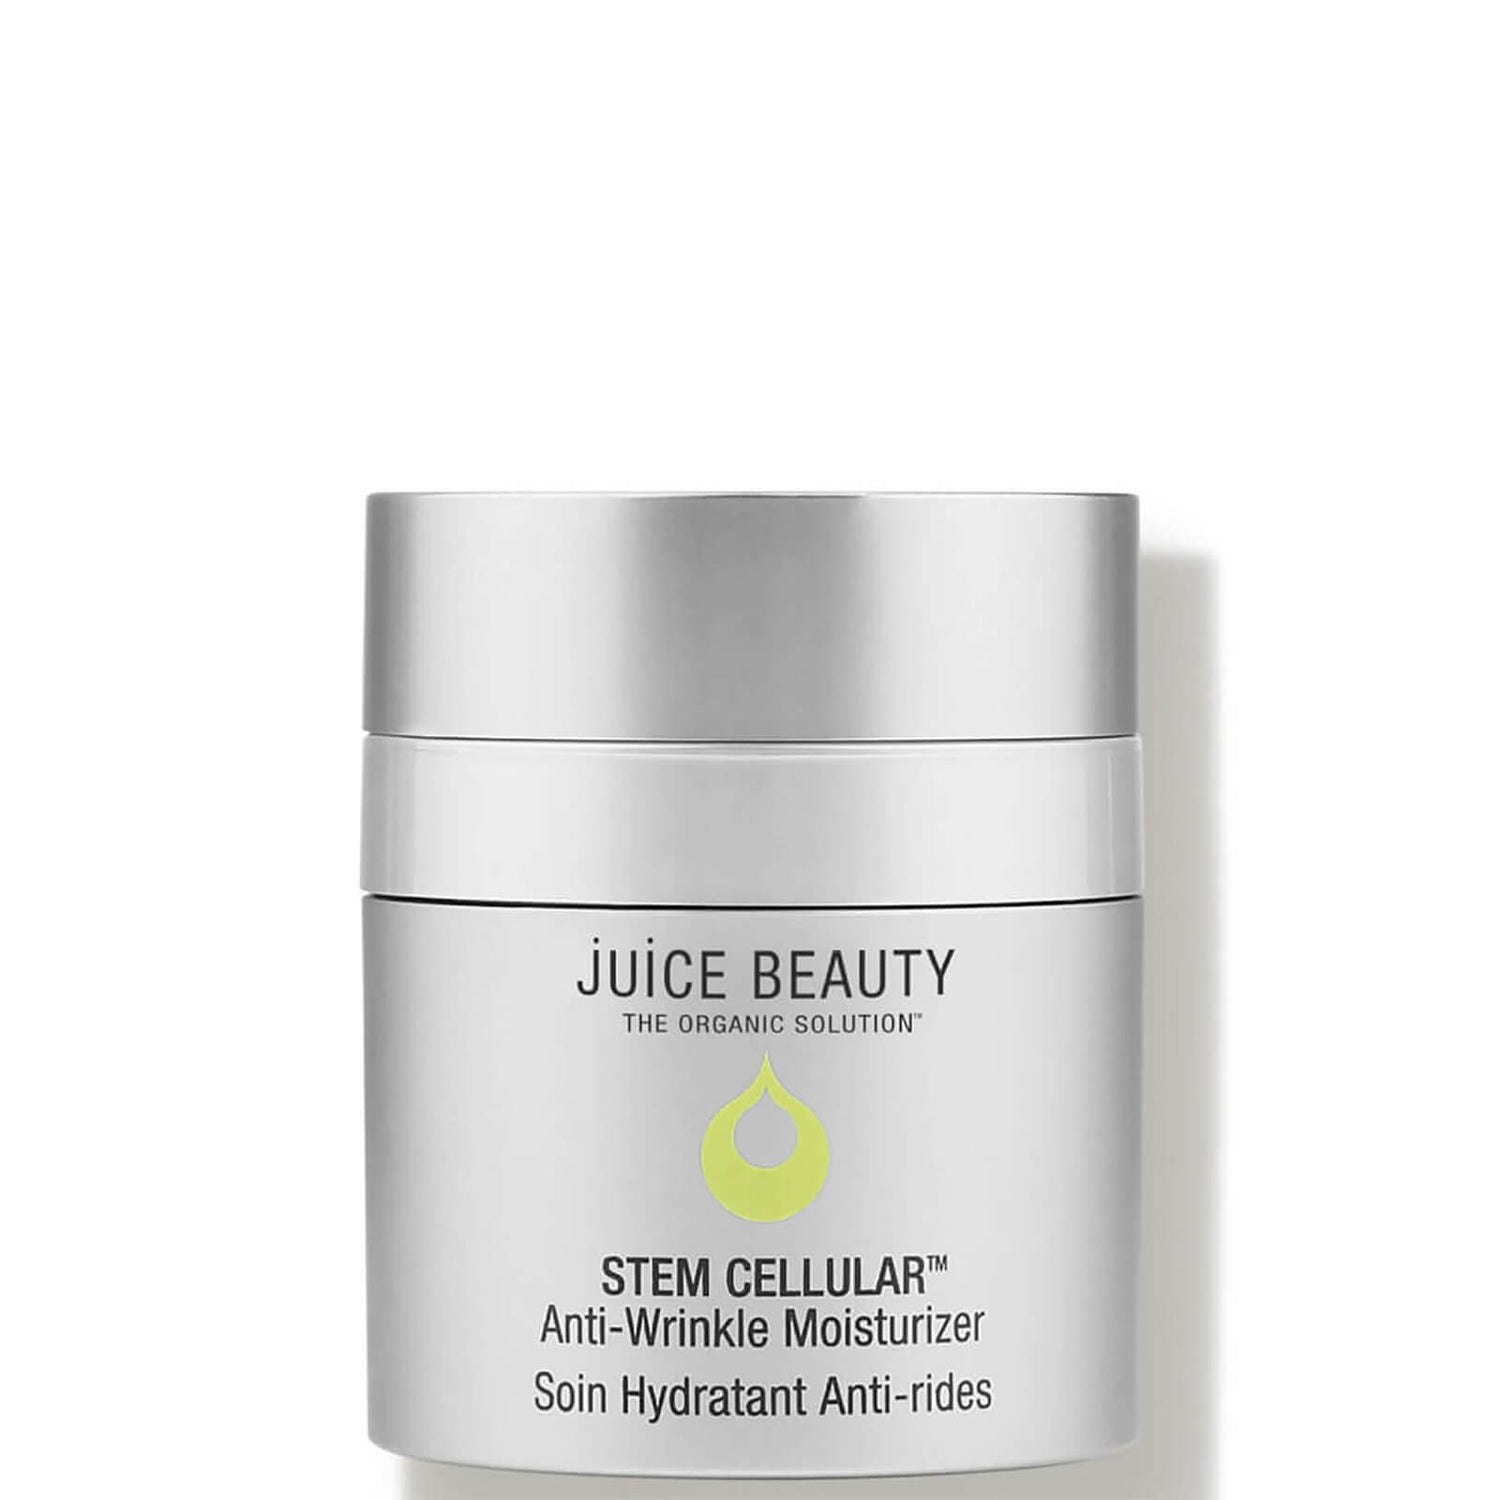 Juice Beauty STEM CELLULAR Anti-Wrinkle Moisturizer (1.7 fl. oz.)